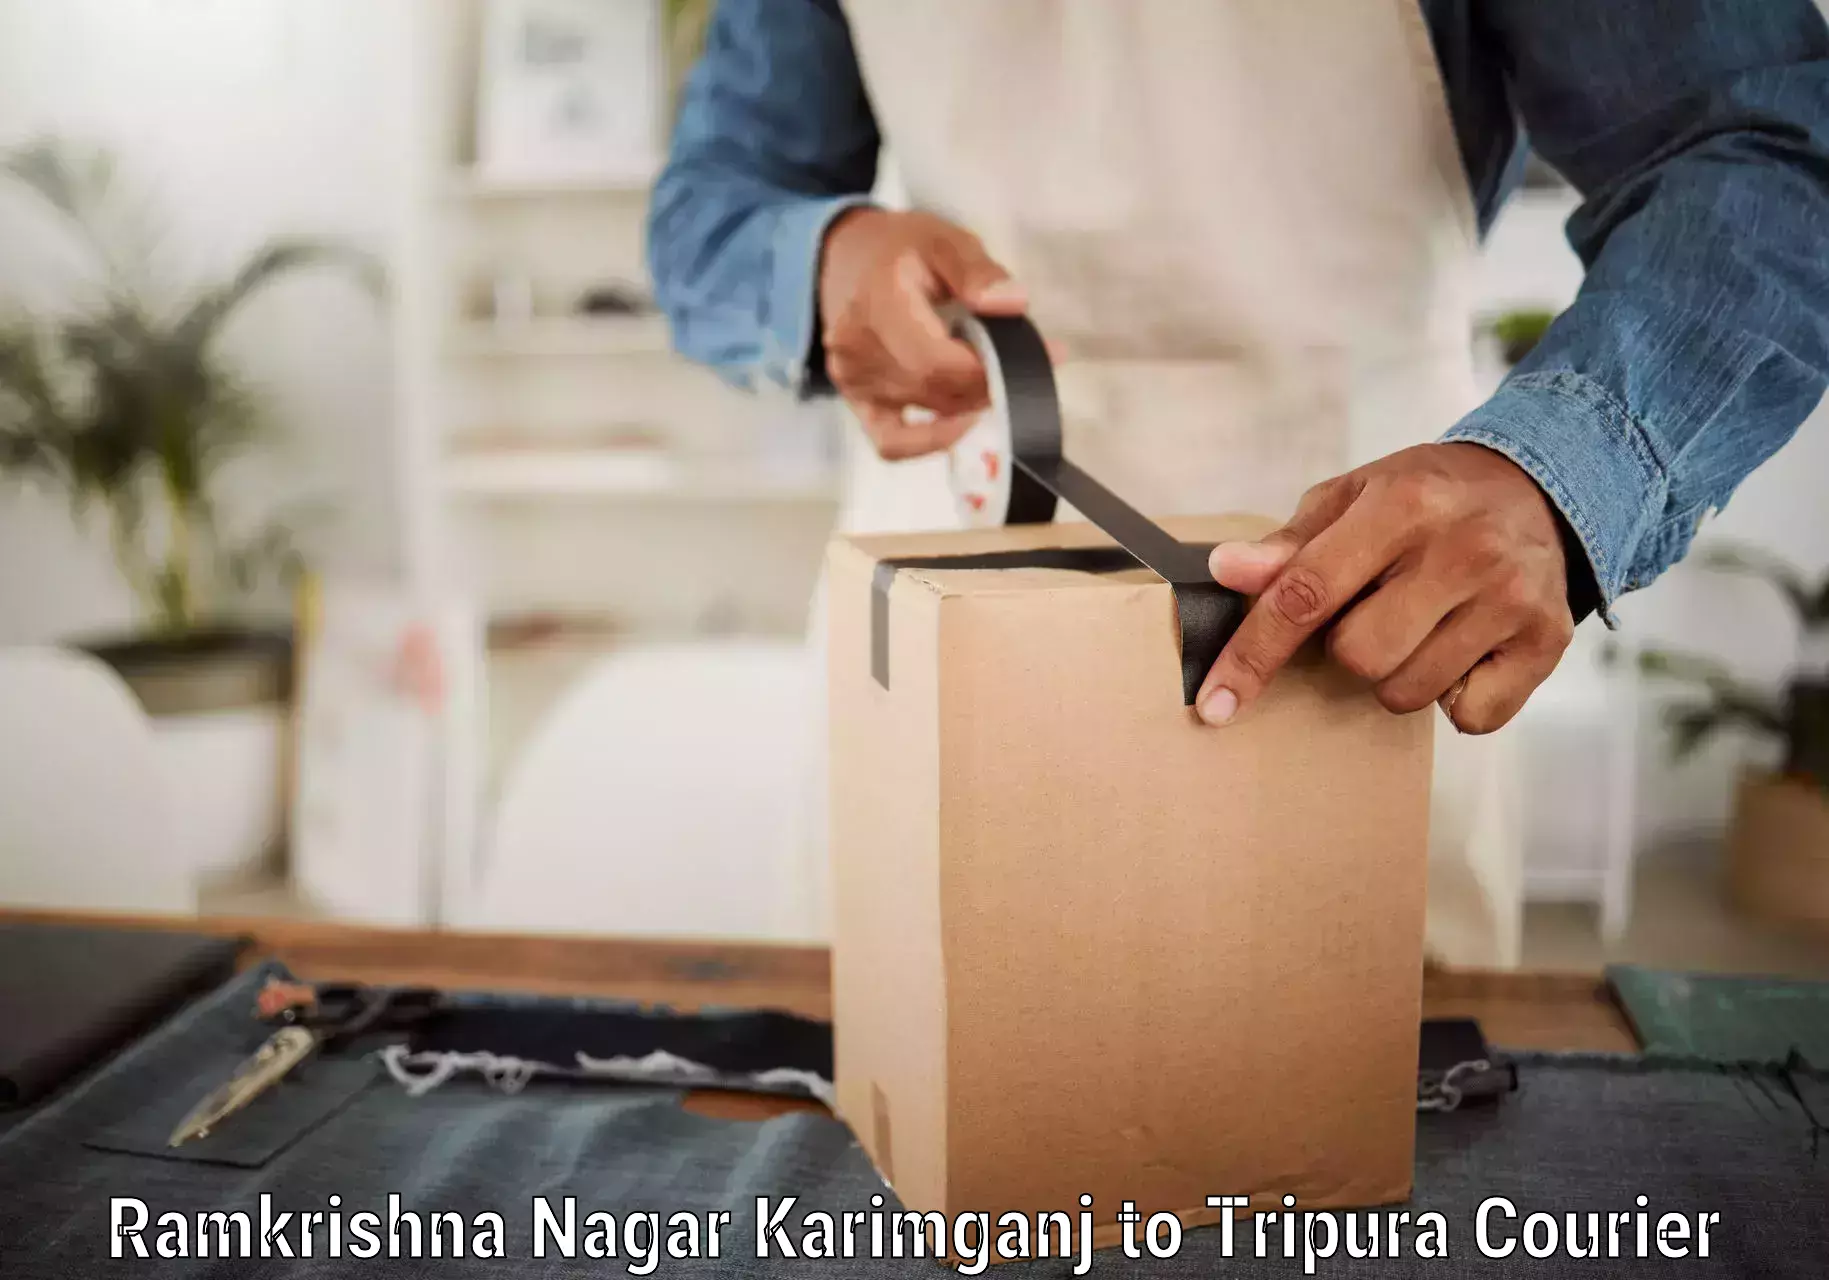 Professional courier handling Ramkrishna Nagar Karimganj to Bishalgarh